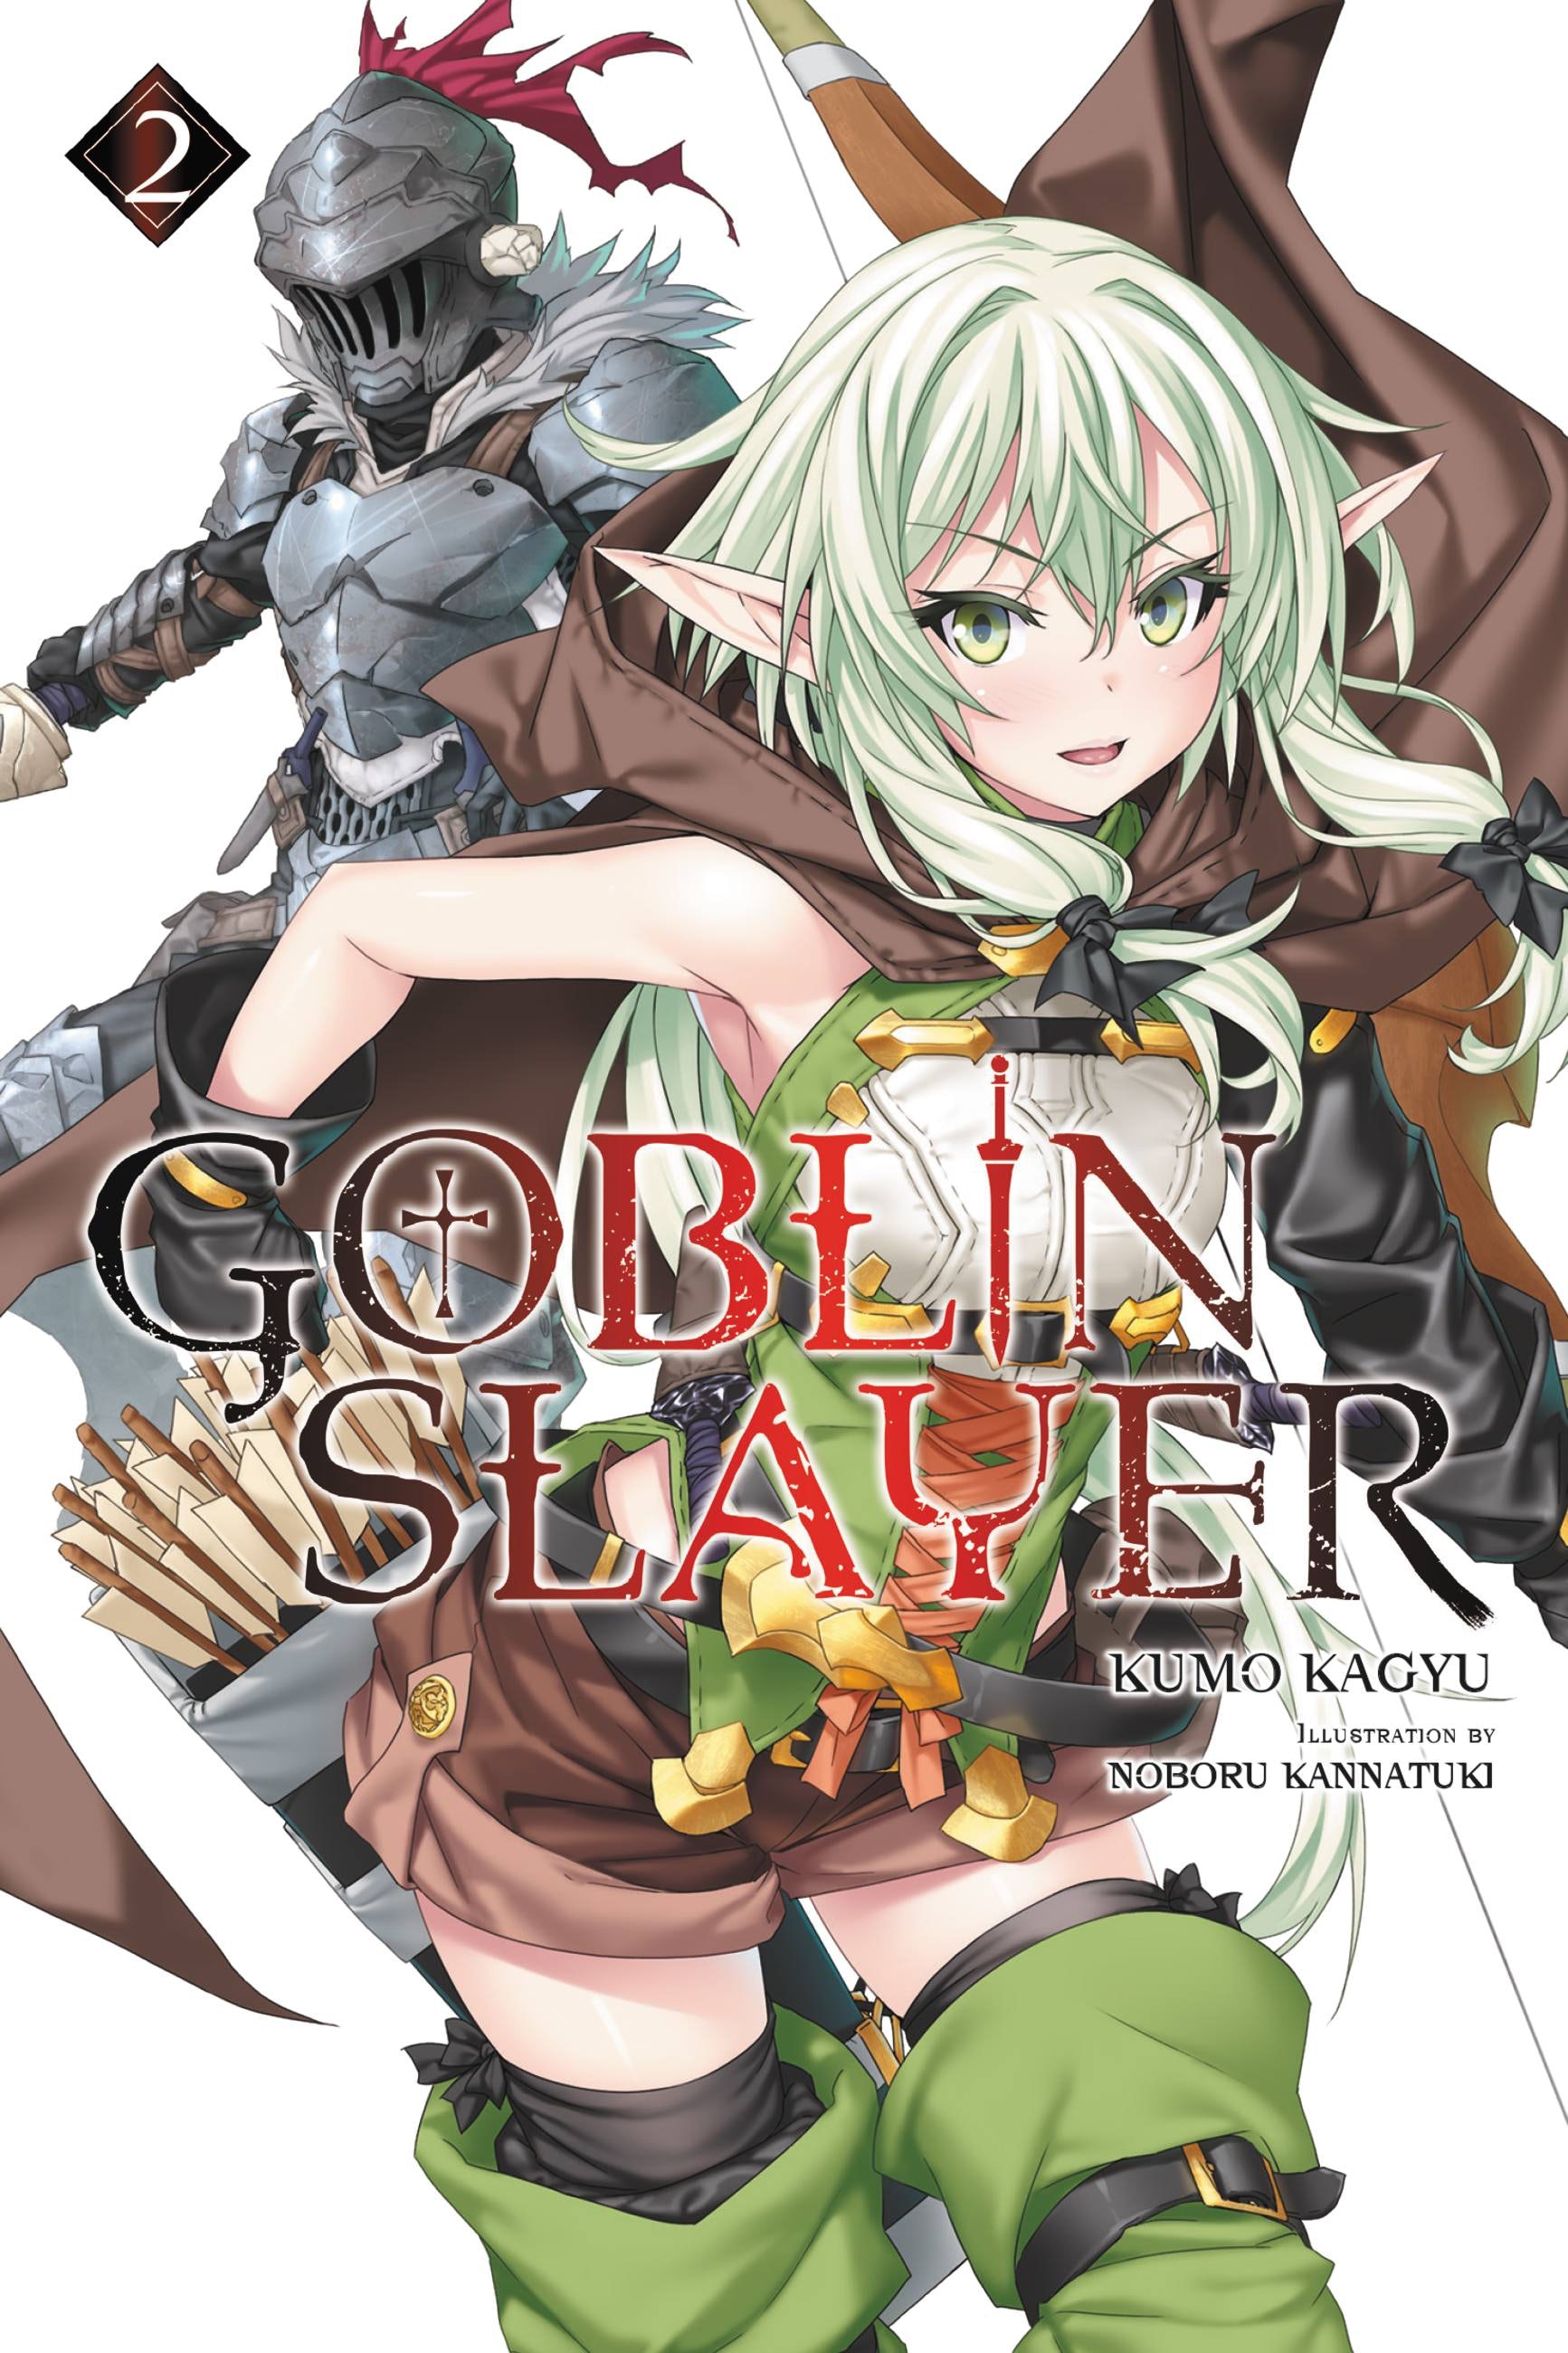 Goblin Slayer, Vol. 5 (manga) (Goblin Slayer (manga), 5)